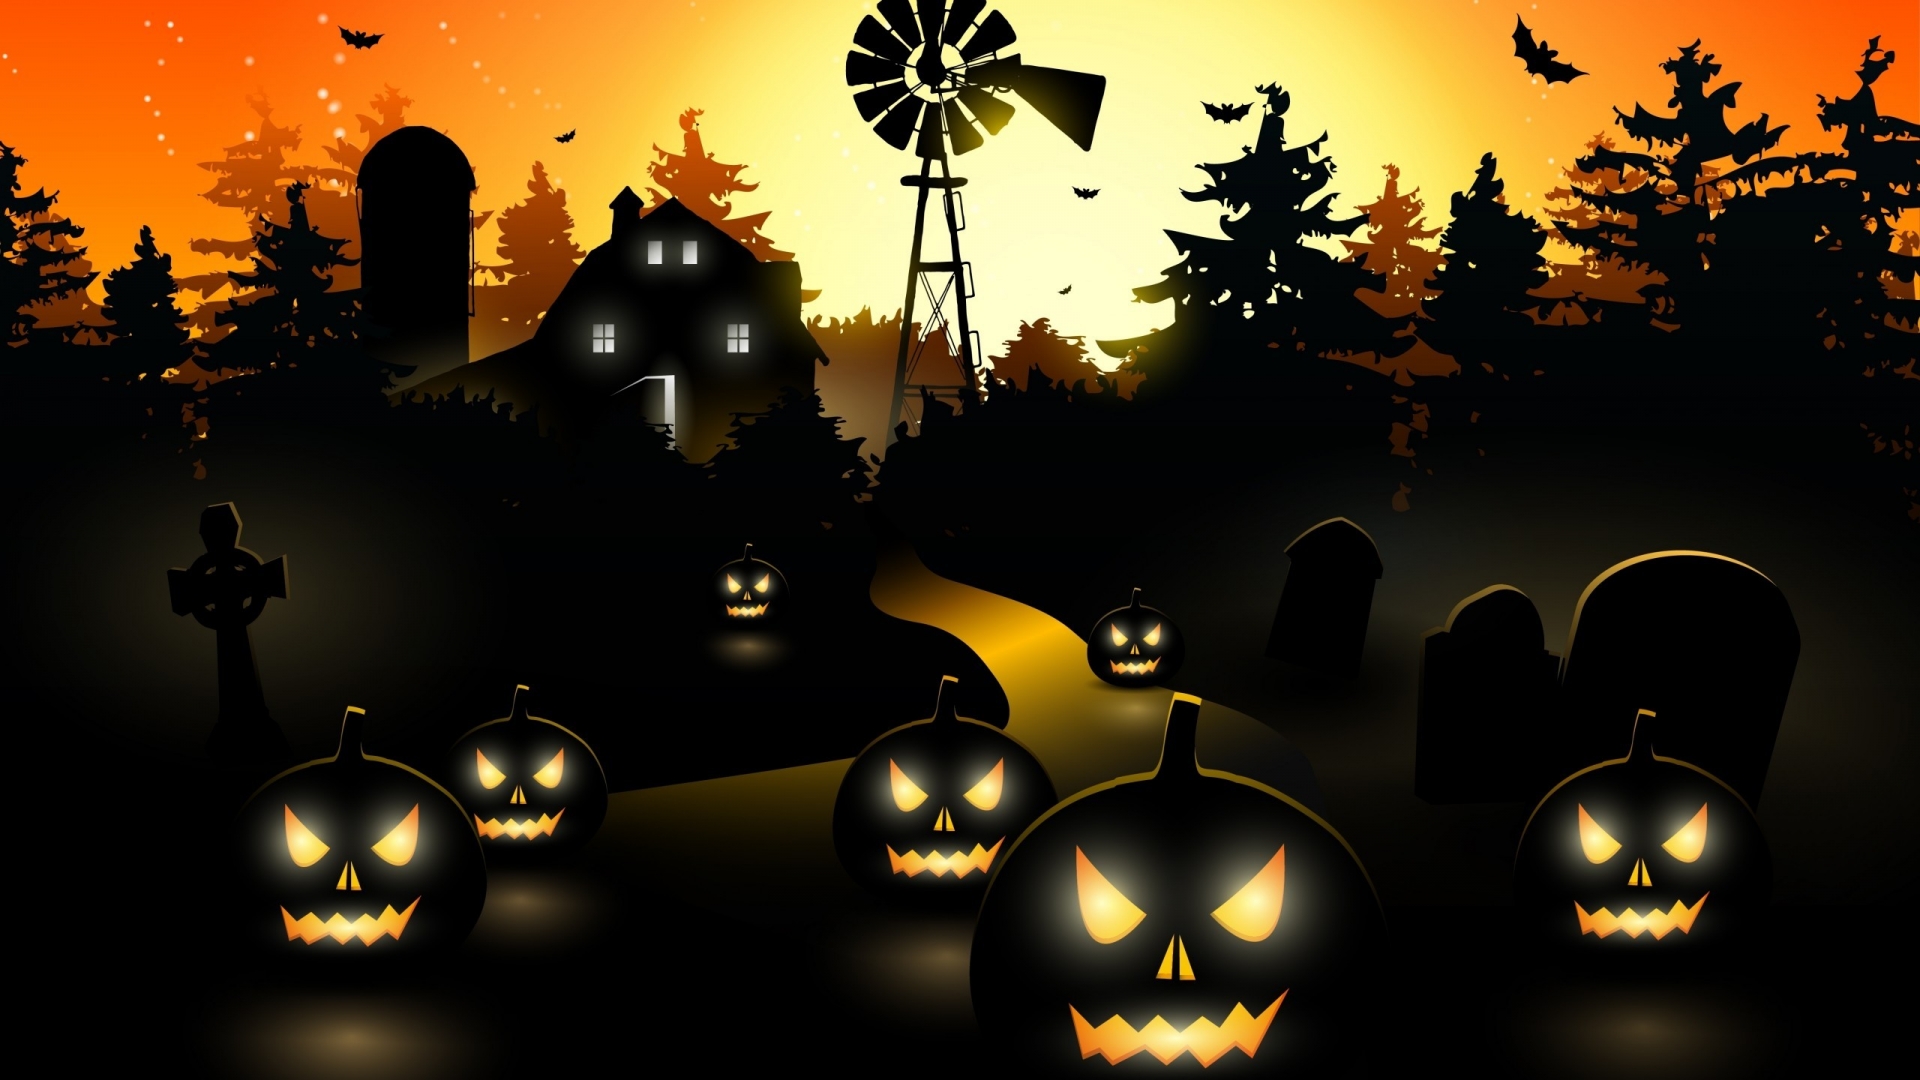 Halloween Black City for 1920 x 1080 HDTV 1080p resolution